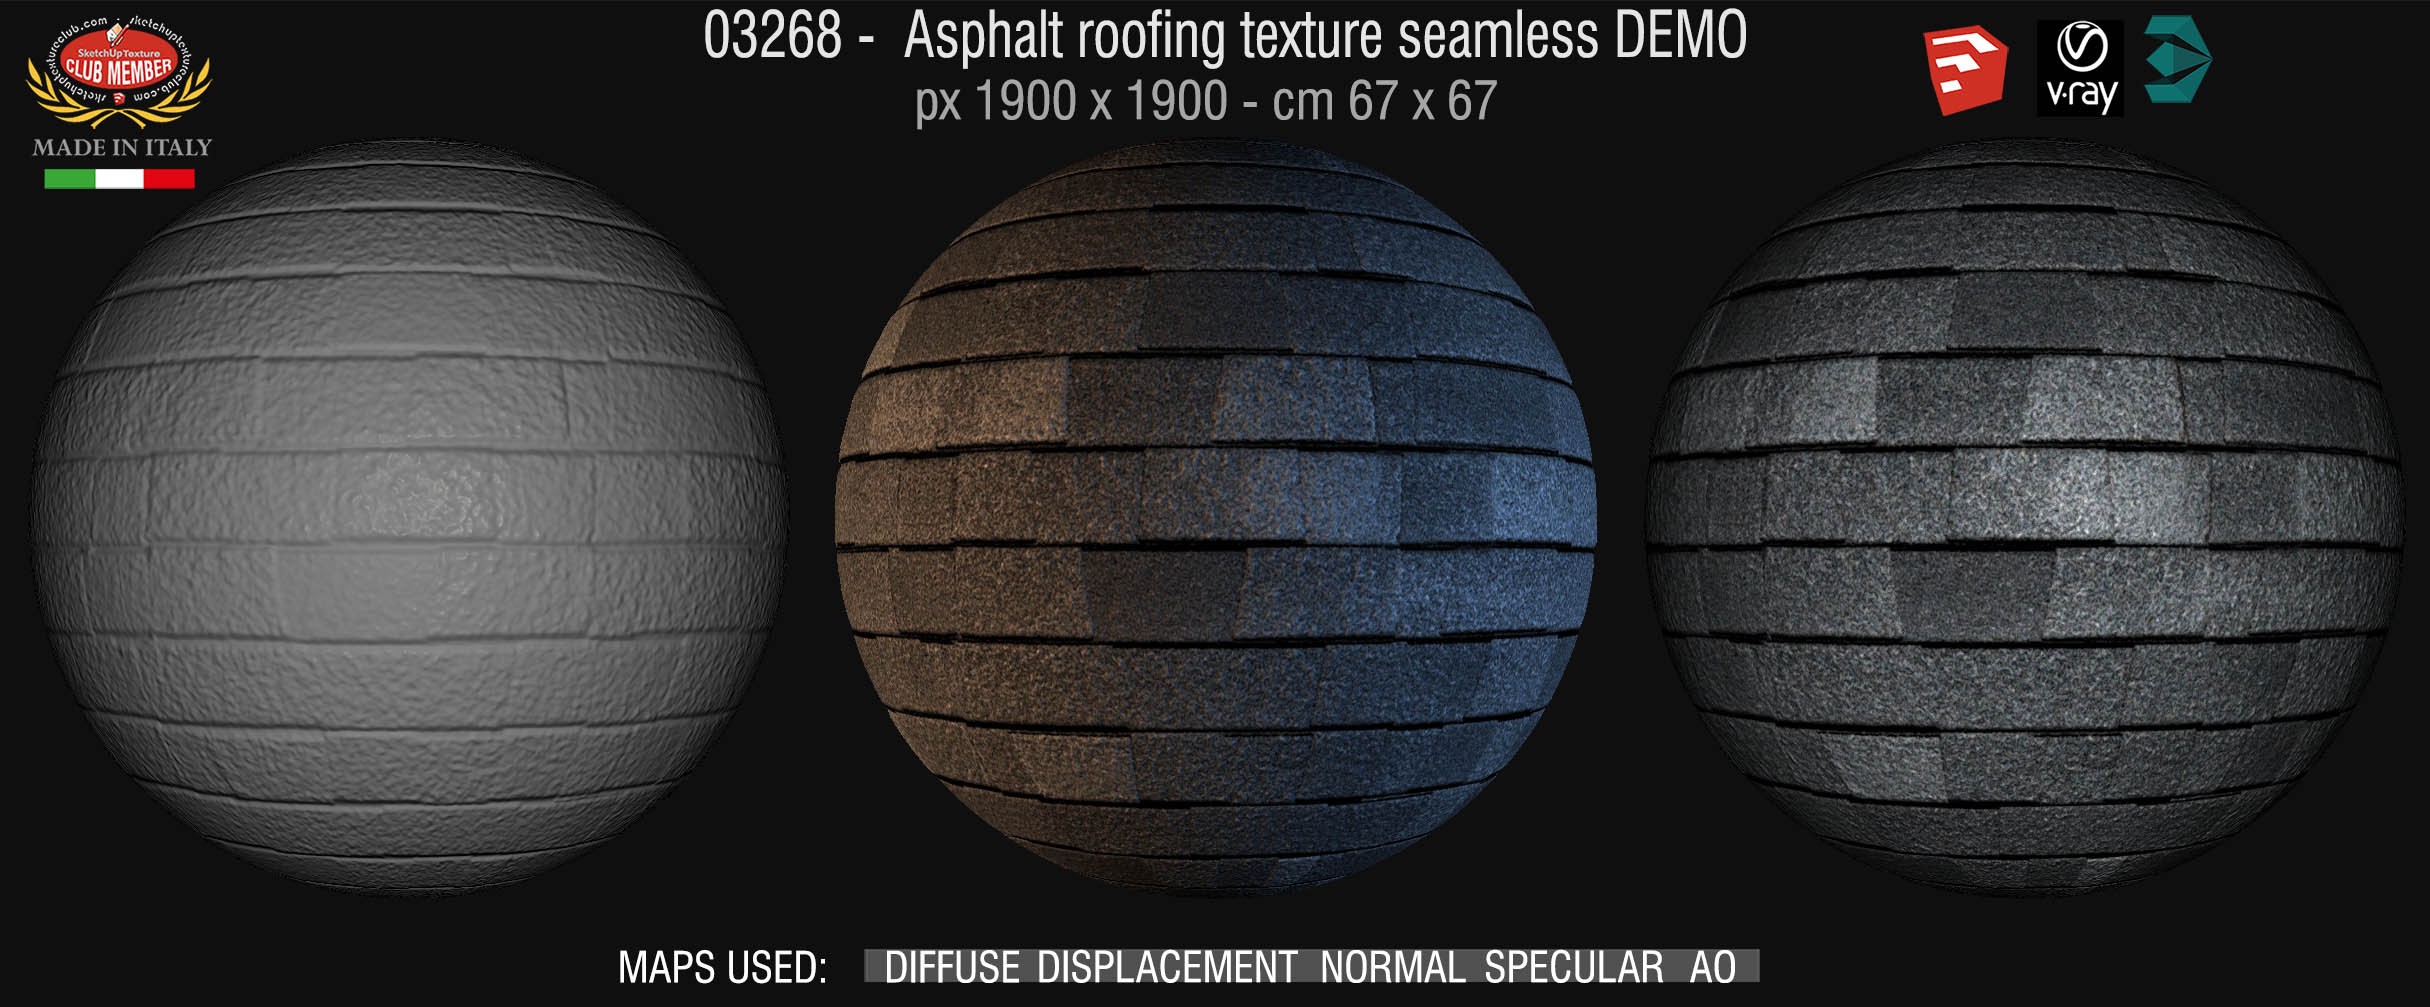 03268 Asphalt roofing texture seamless + maps DEMO